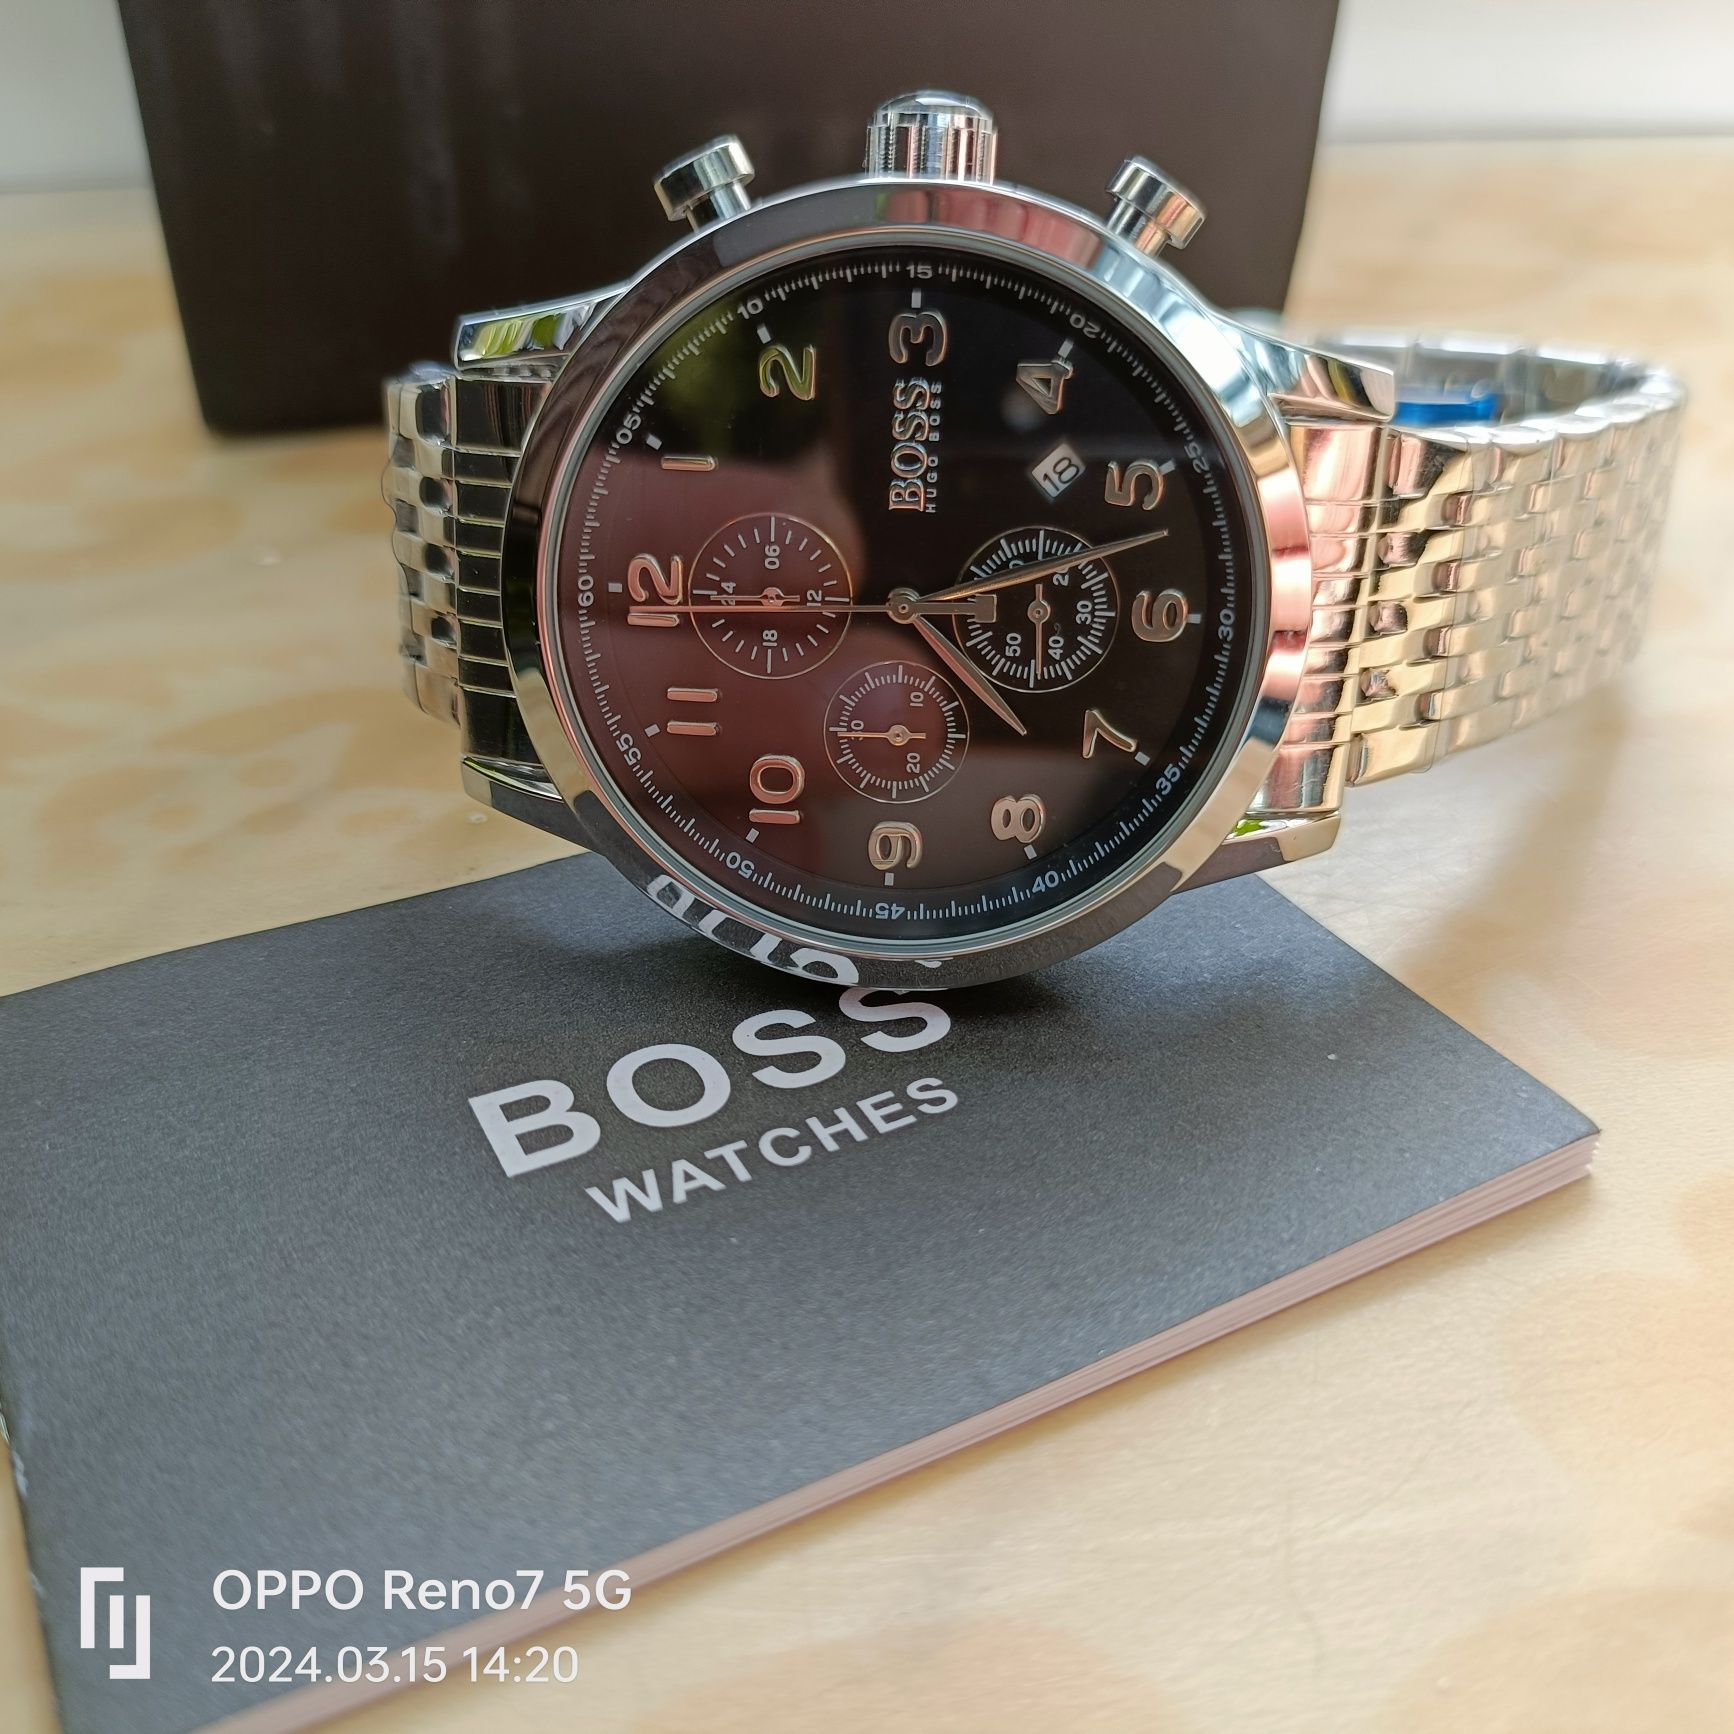 Zegarek Hugo Boss srebrny